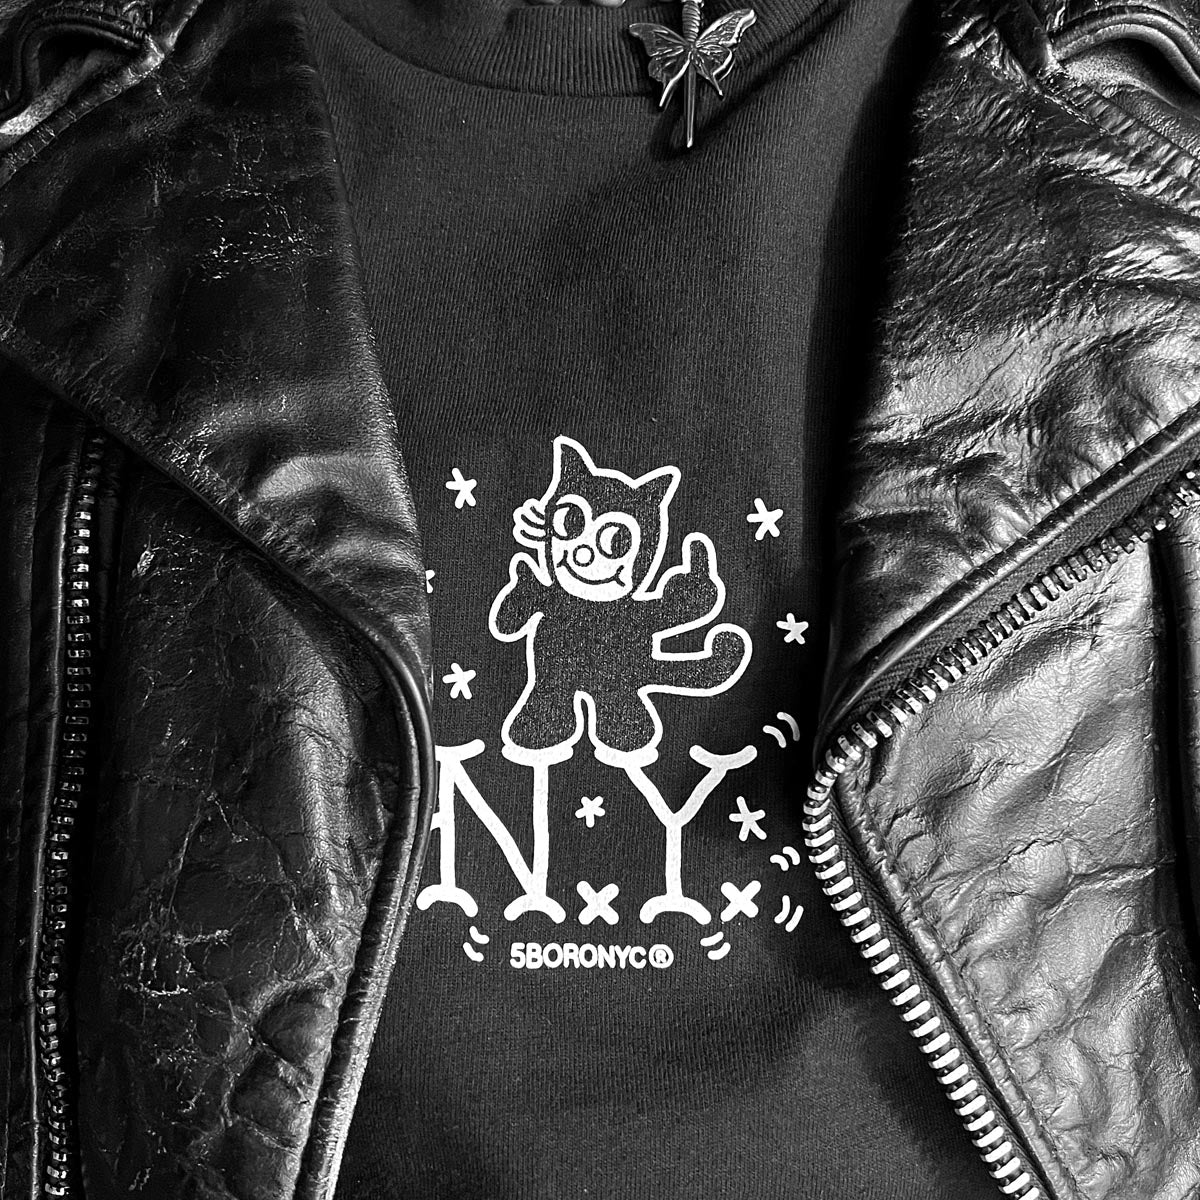 5Boro NY Cat T-Shirt - Black/White image 2